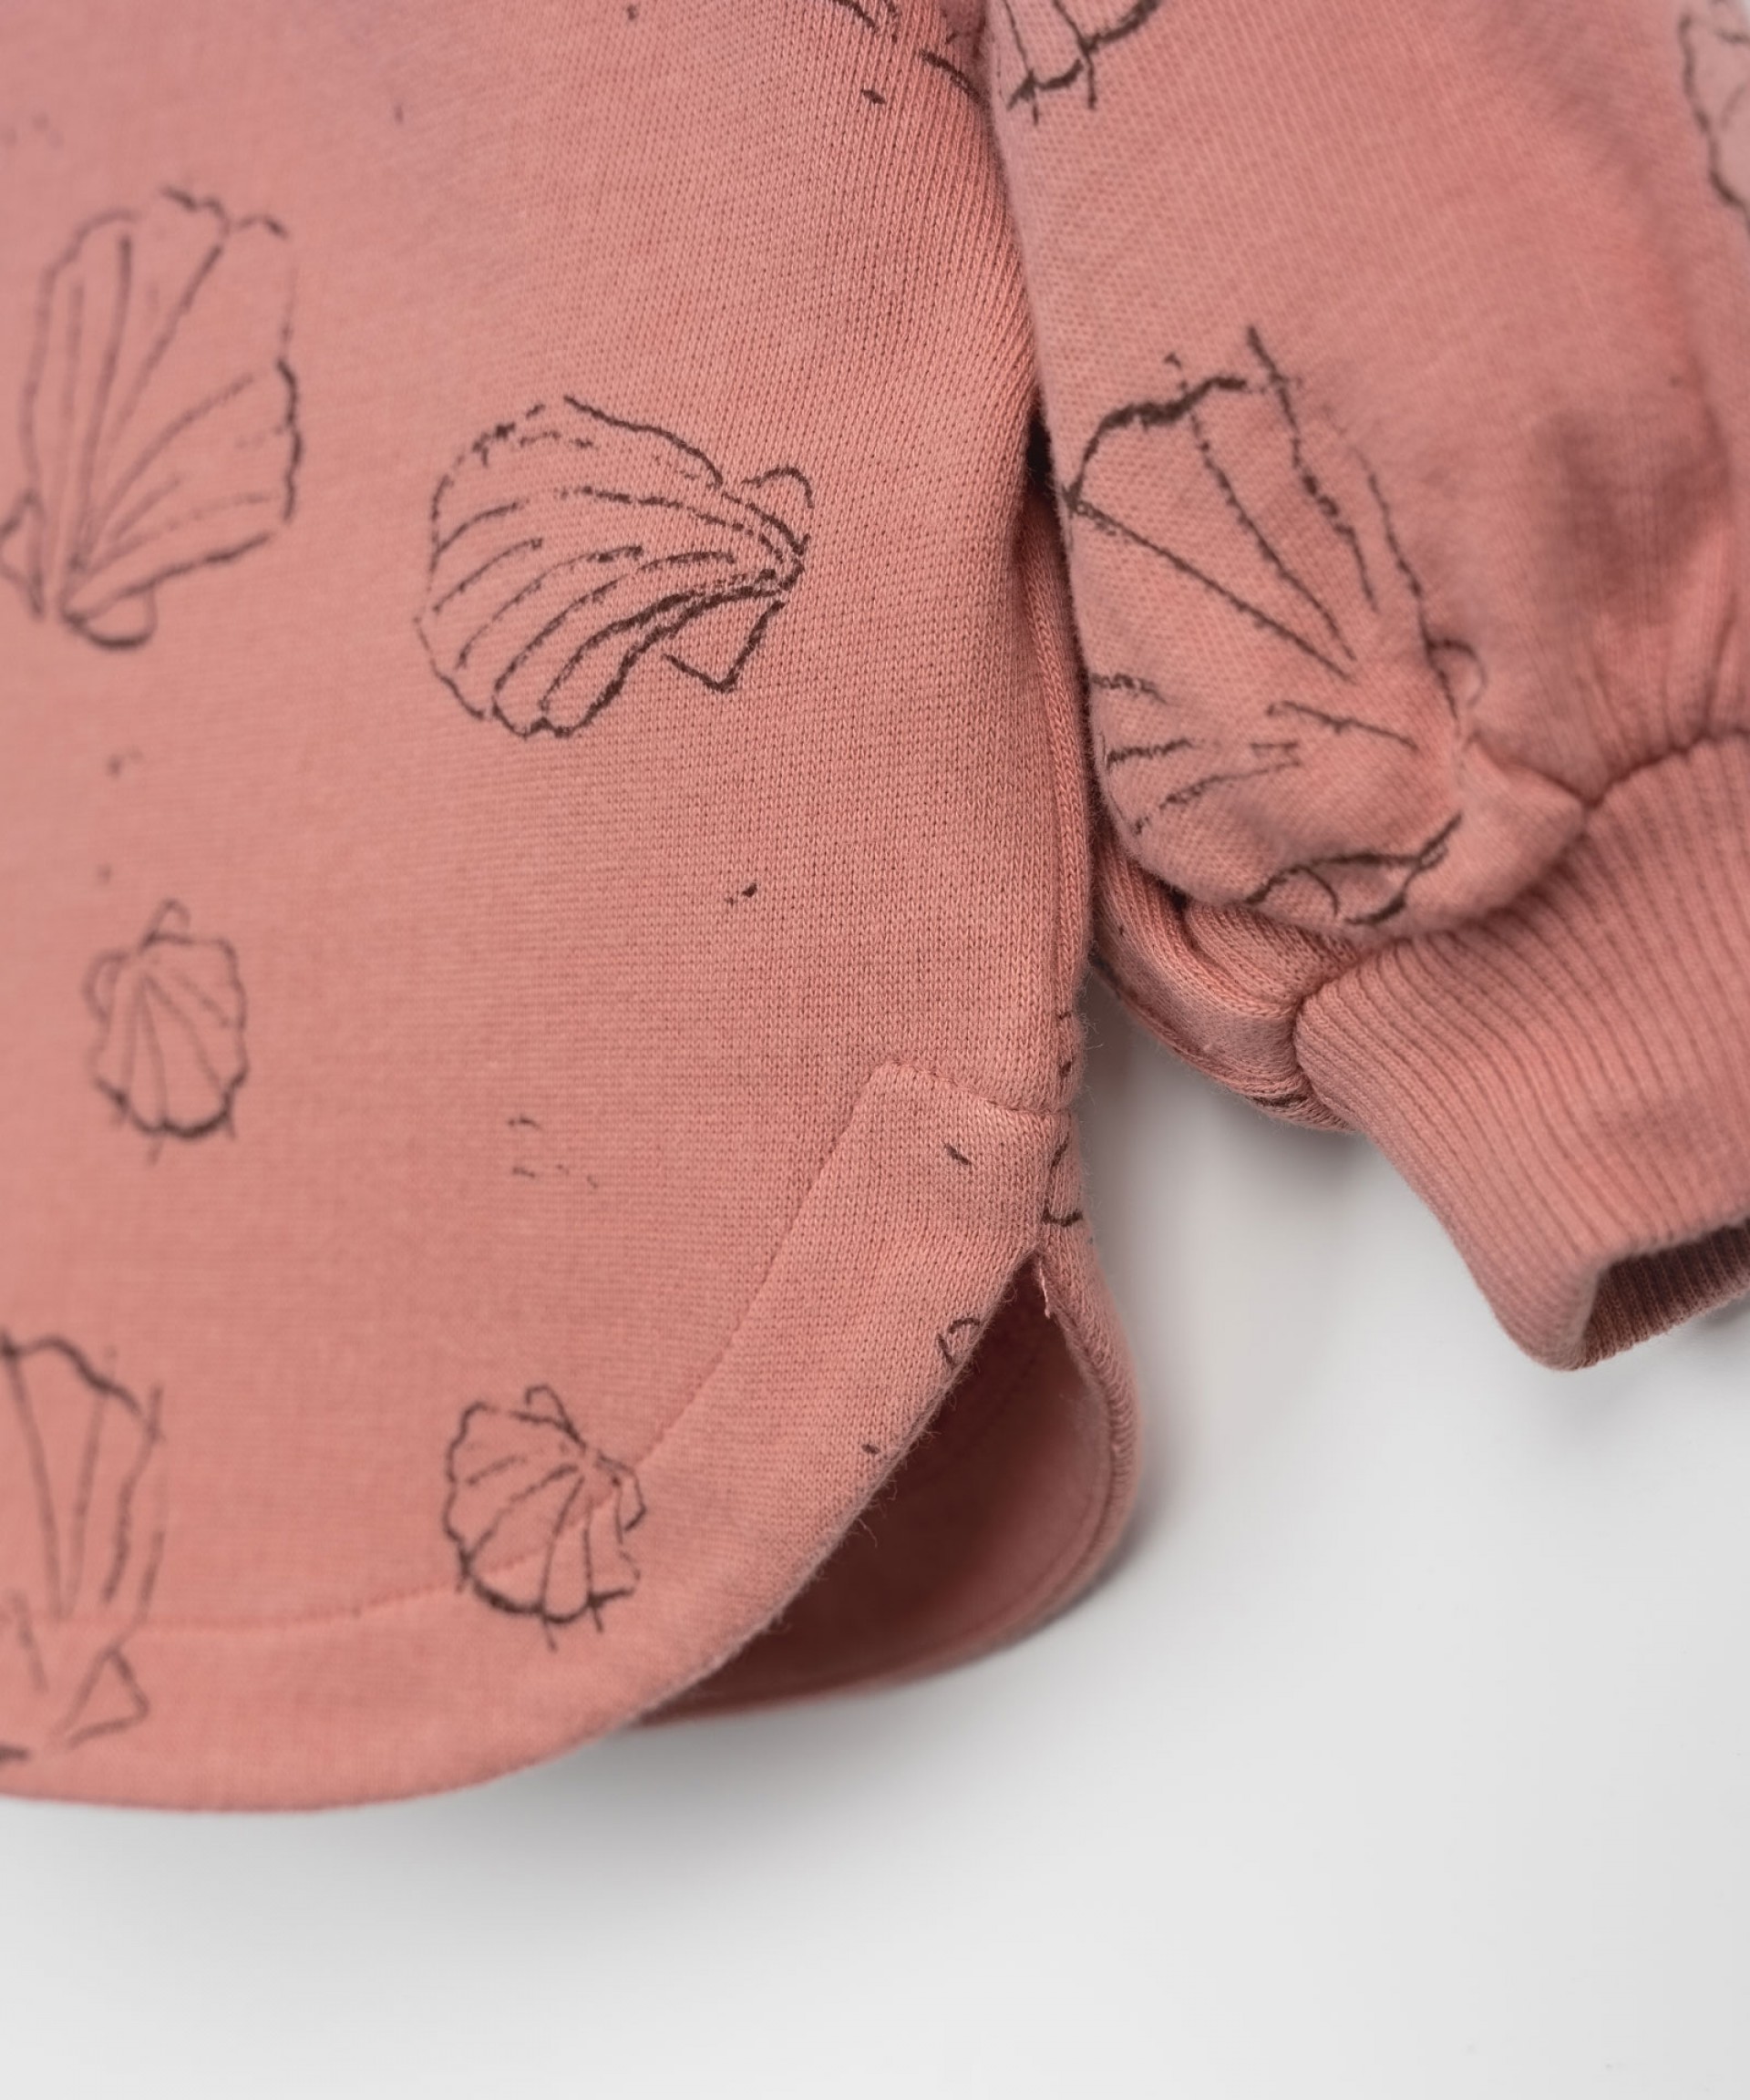 Camisola com corte arredondado | Textile Art